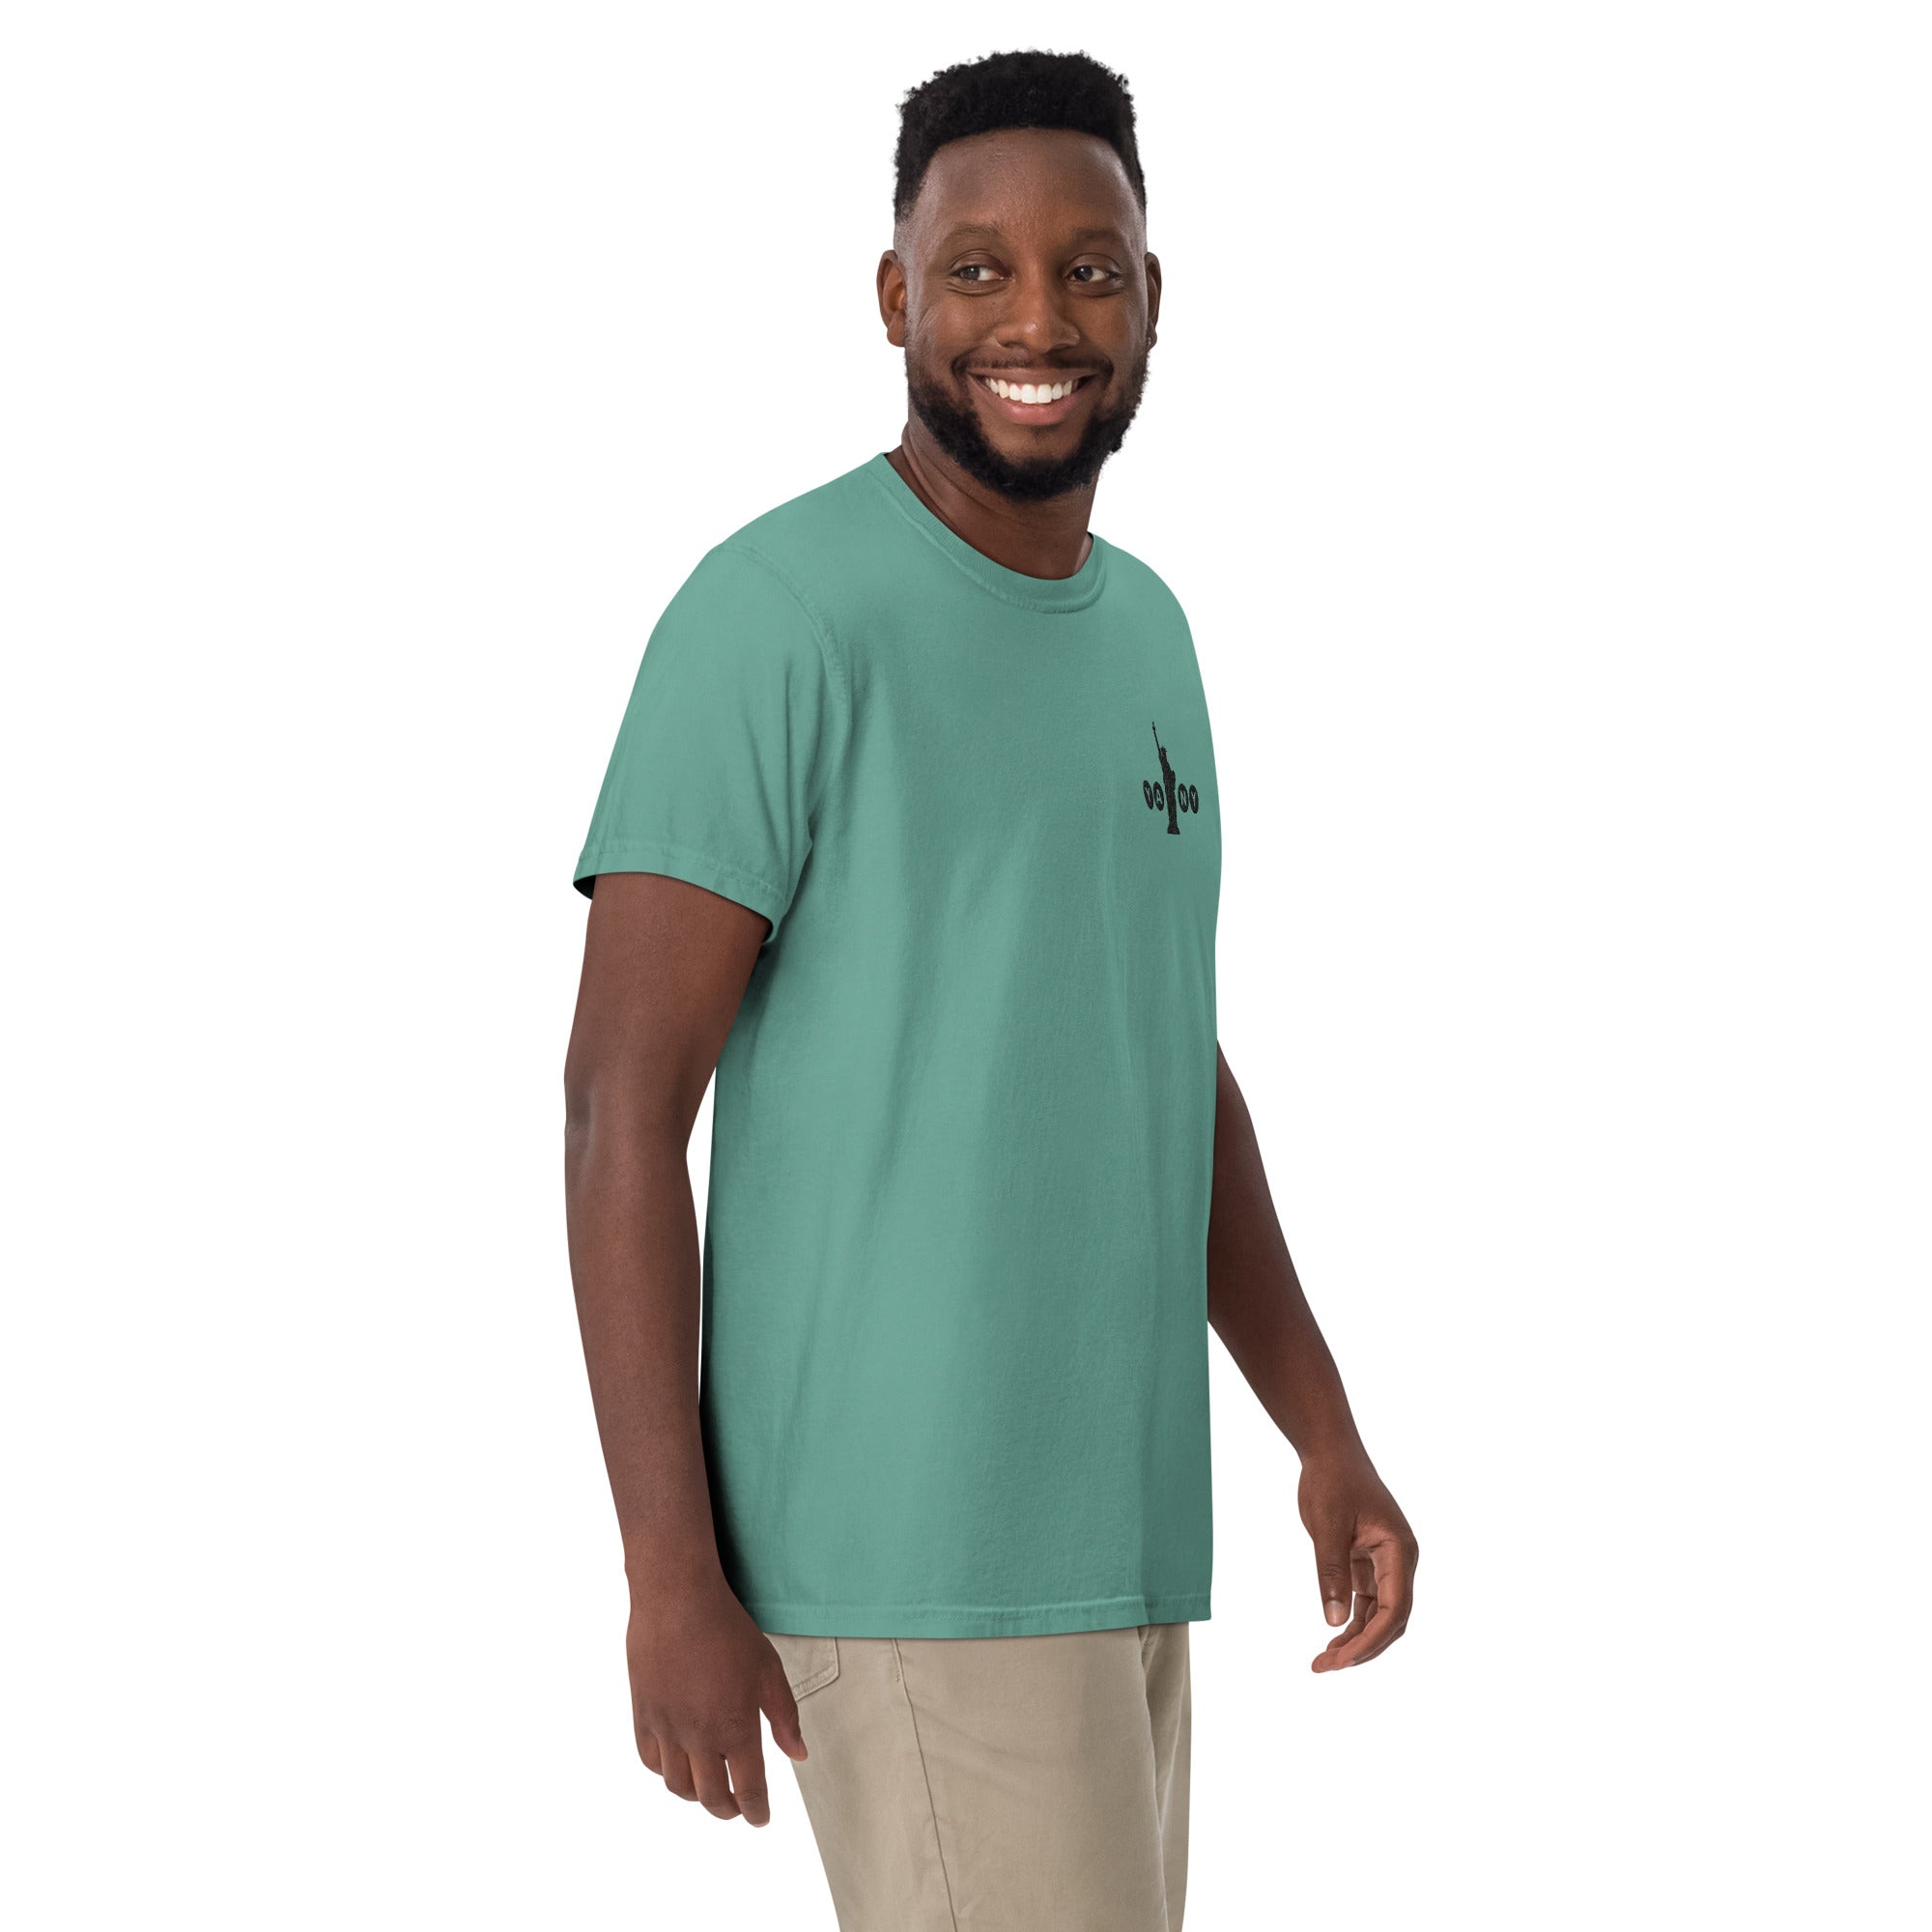 Camiseta de hombre de peso pesado teñida en prenda